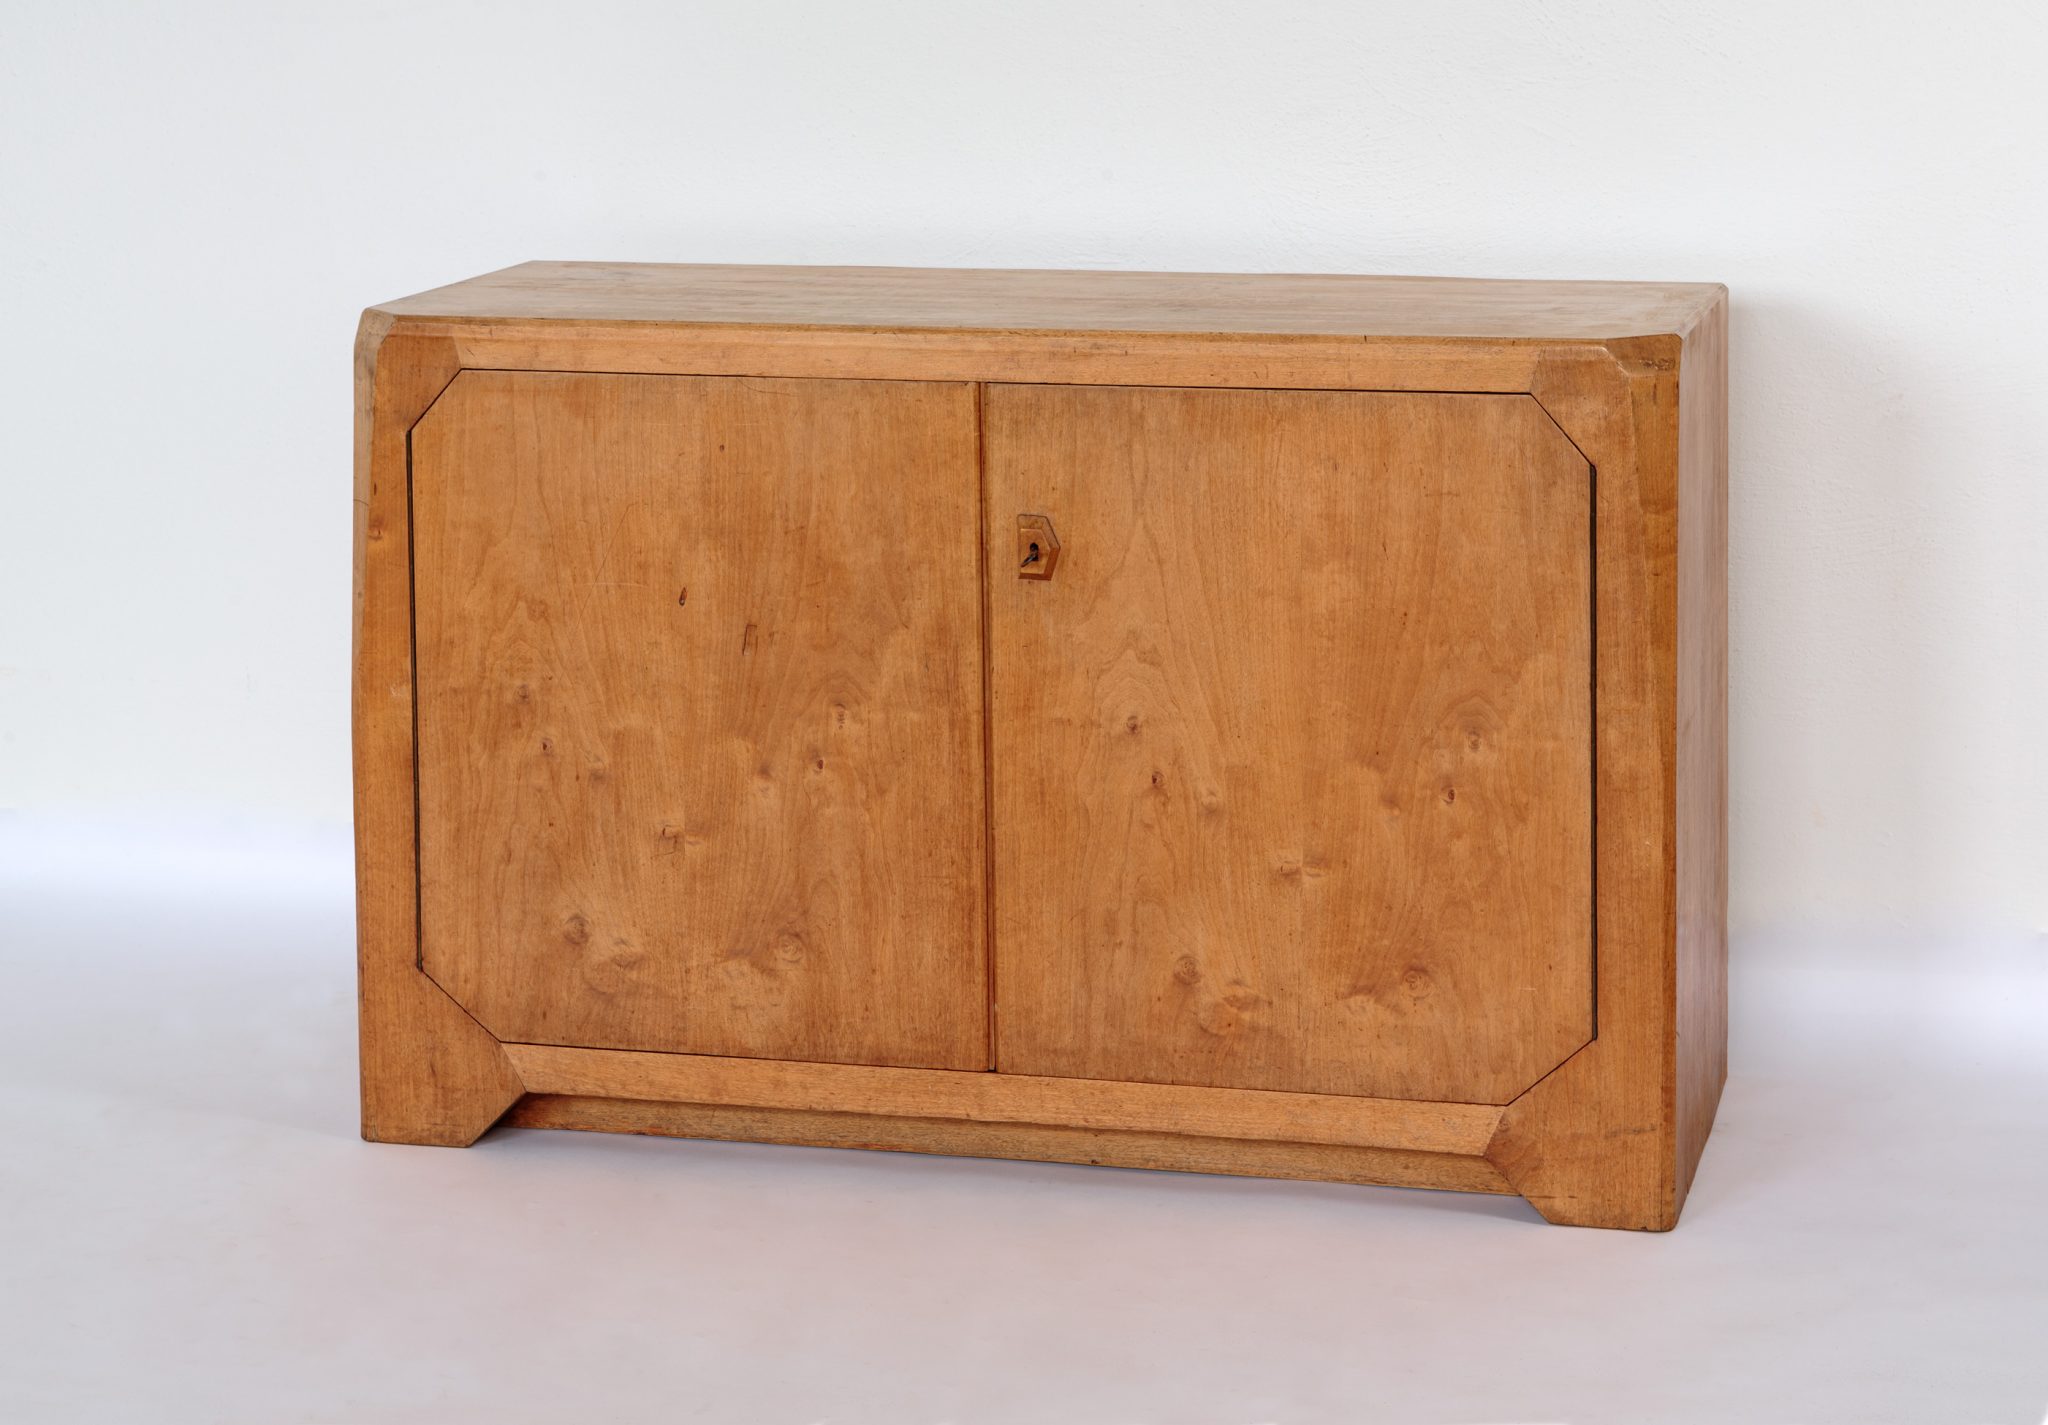 Felix Kayser - Commode, Material: wooden veneer, Period: anthroposophical style